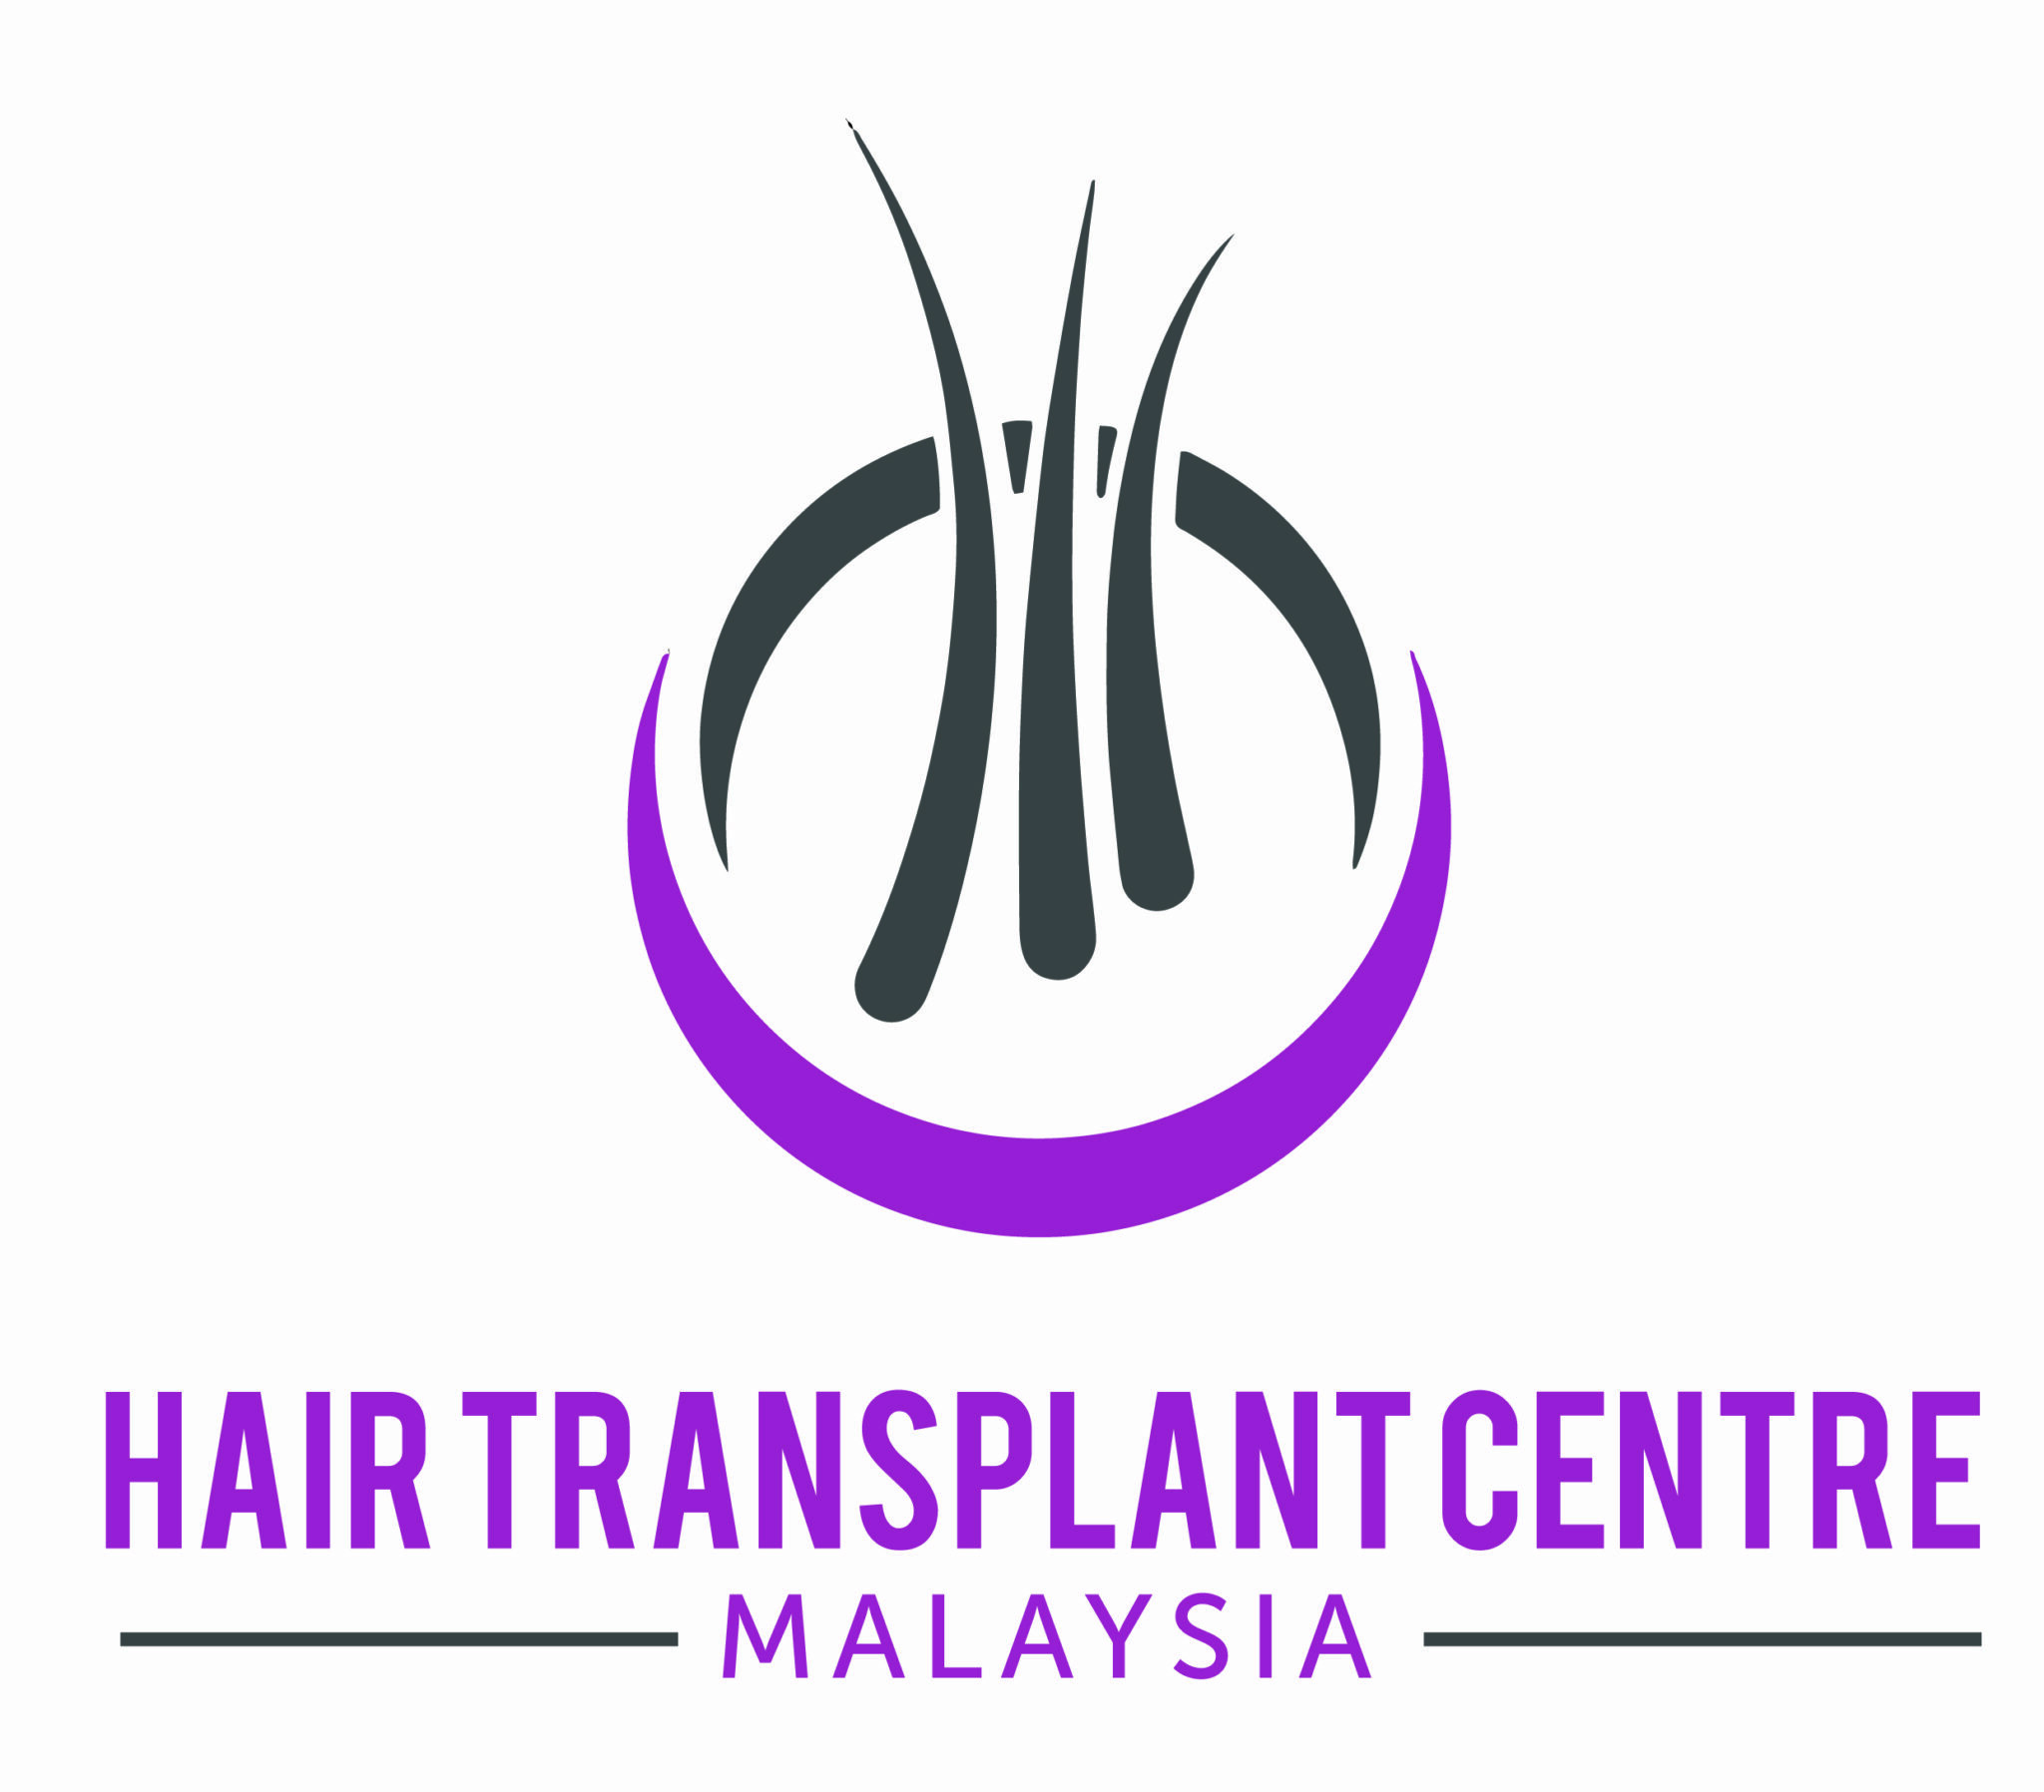 hair transplant centre malaysia logo